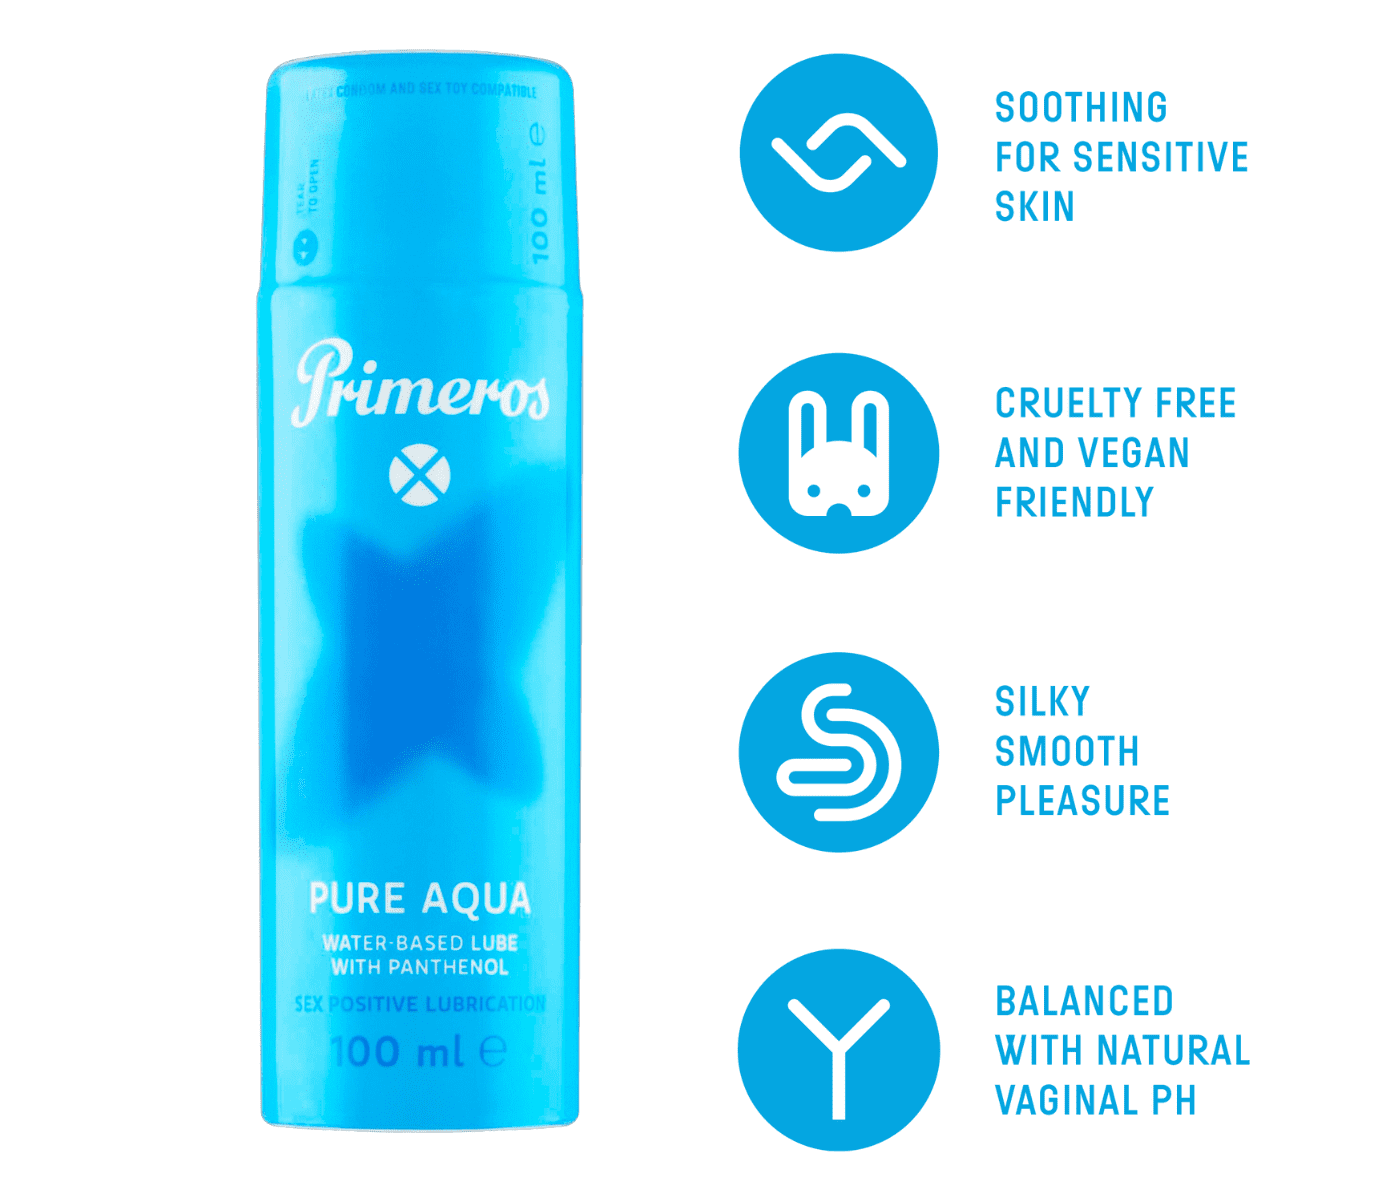 Primeros lubrikant Pure Aqua, kondomy Passion a vibrační kroužek jako dárek zdarma